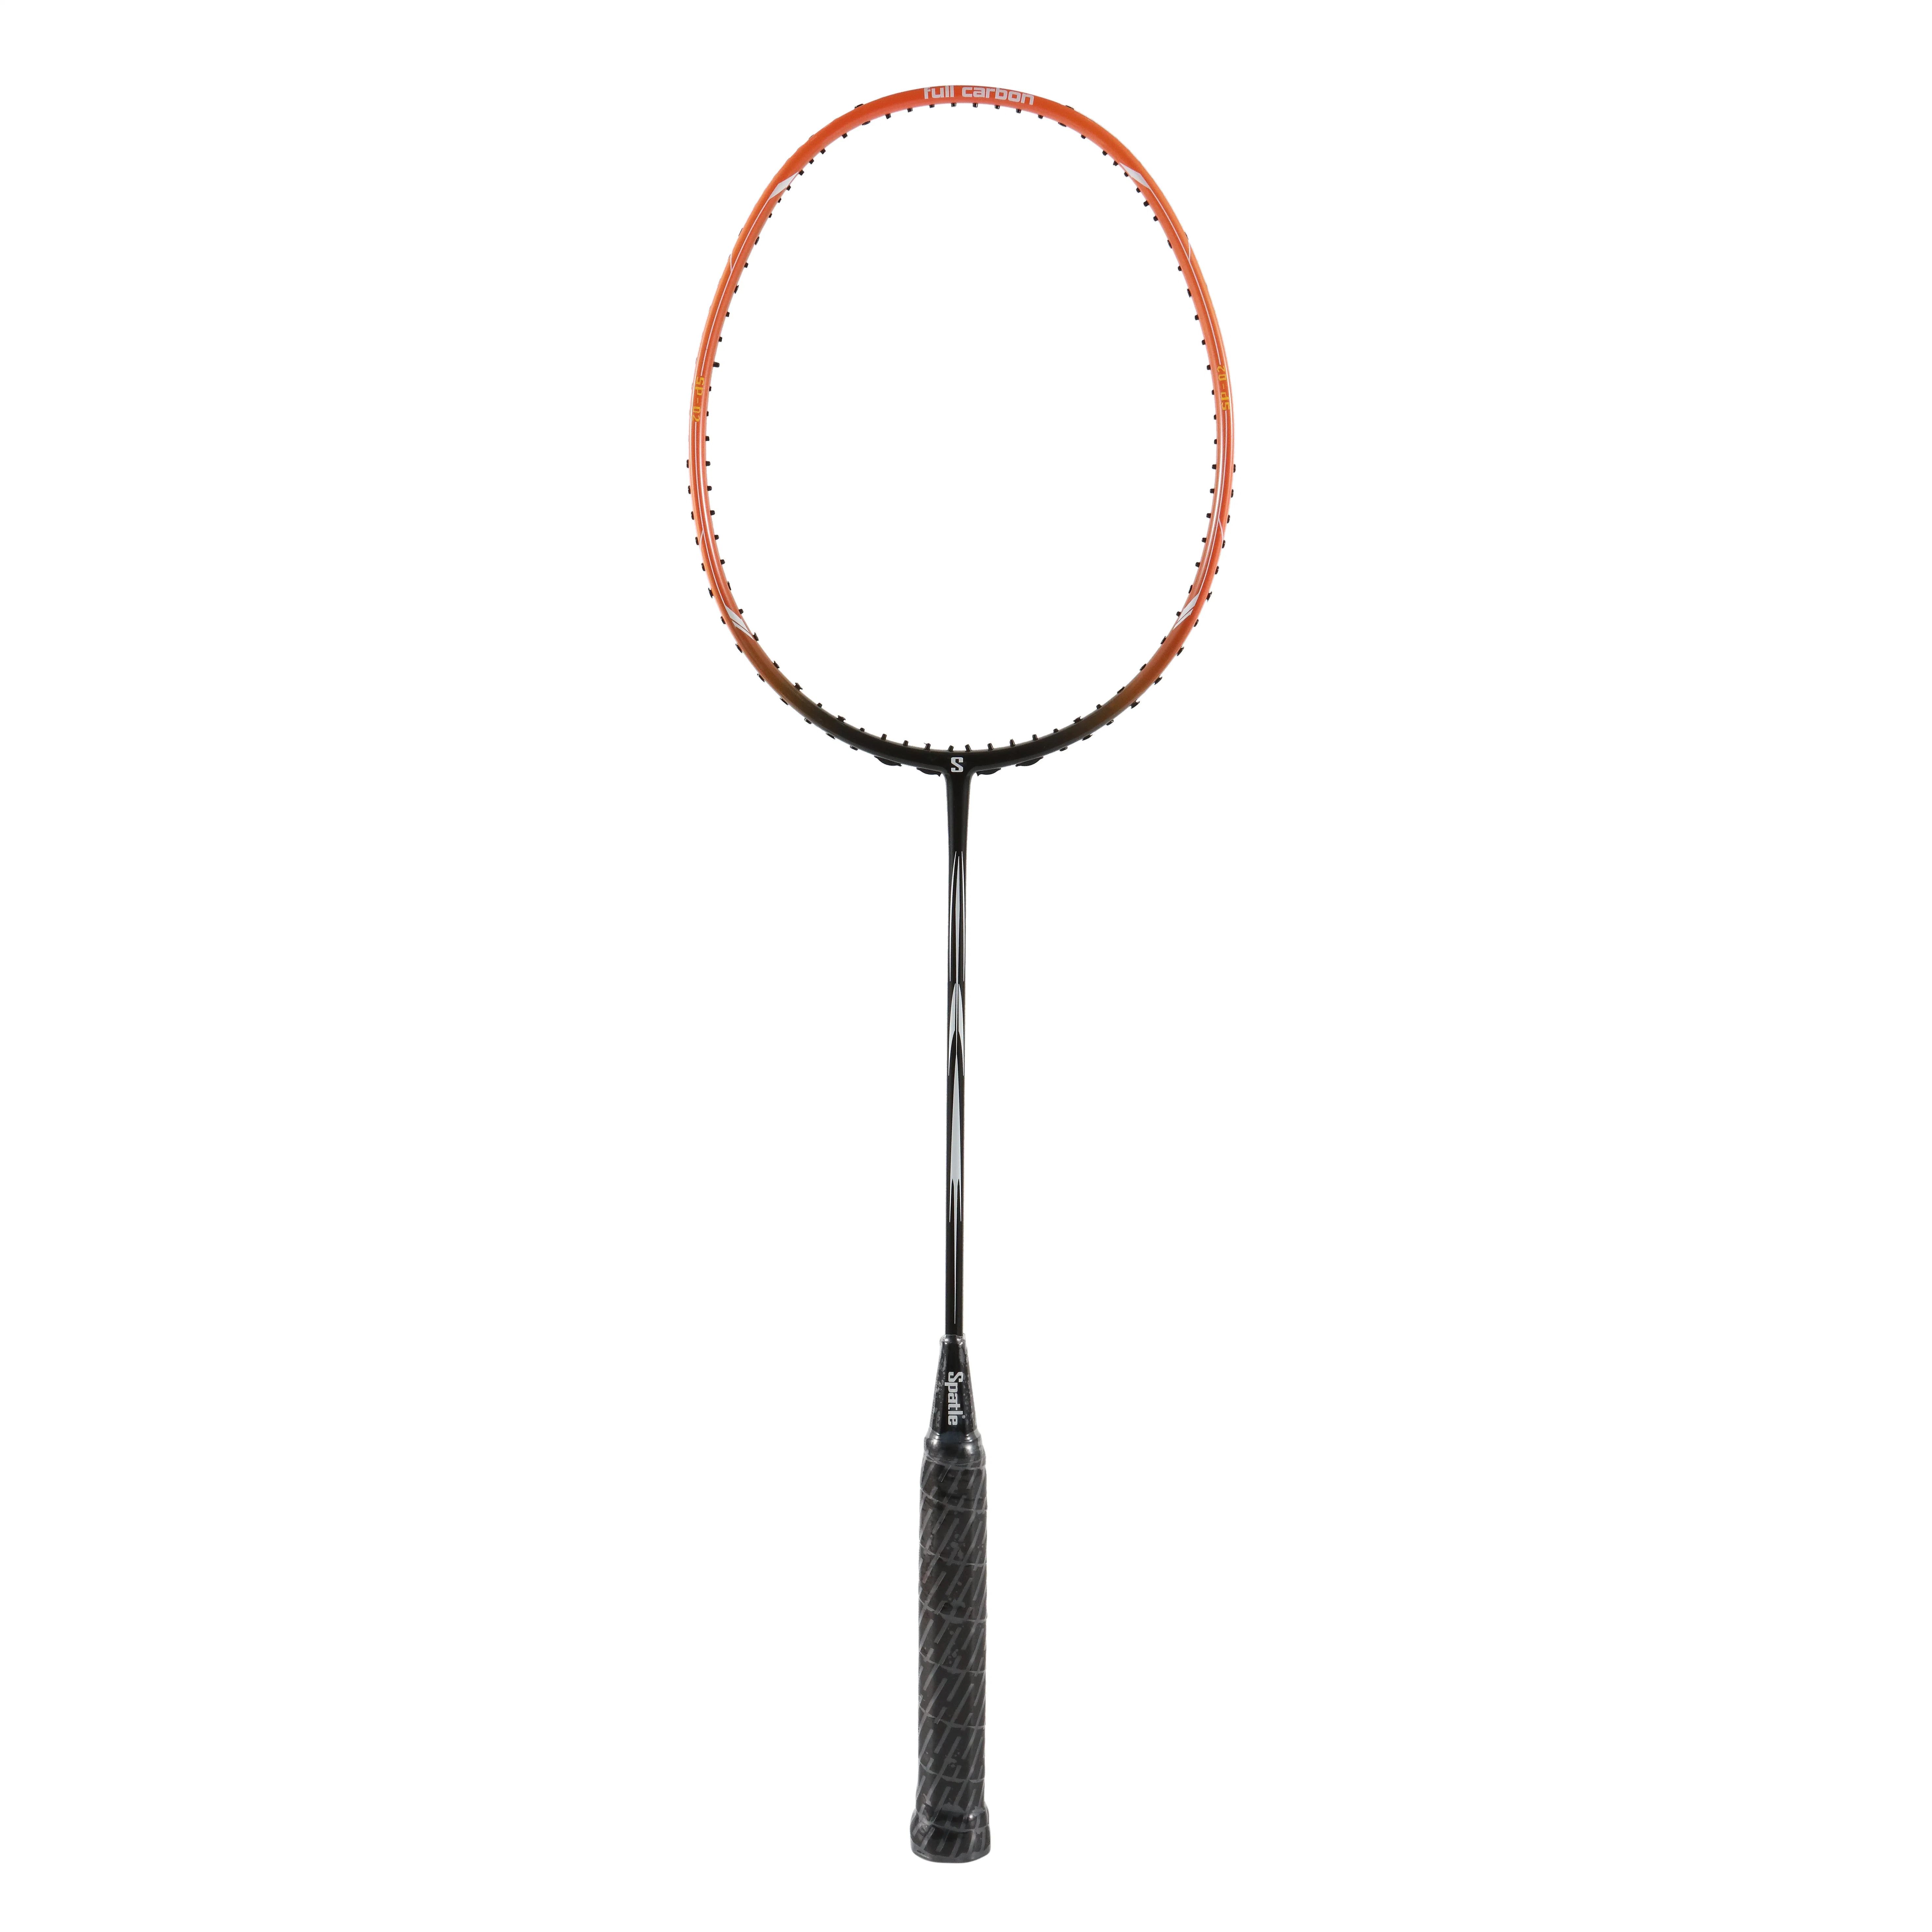 Outdoor Sports Badminton Racket Carbon Fiber Badminton Racket Customize